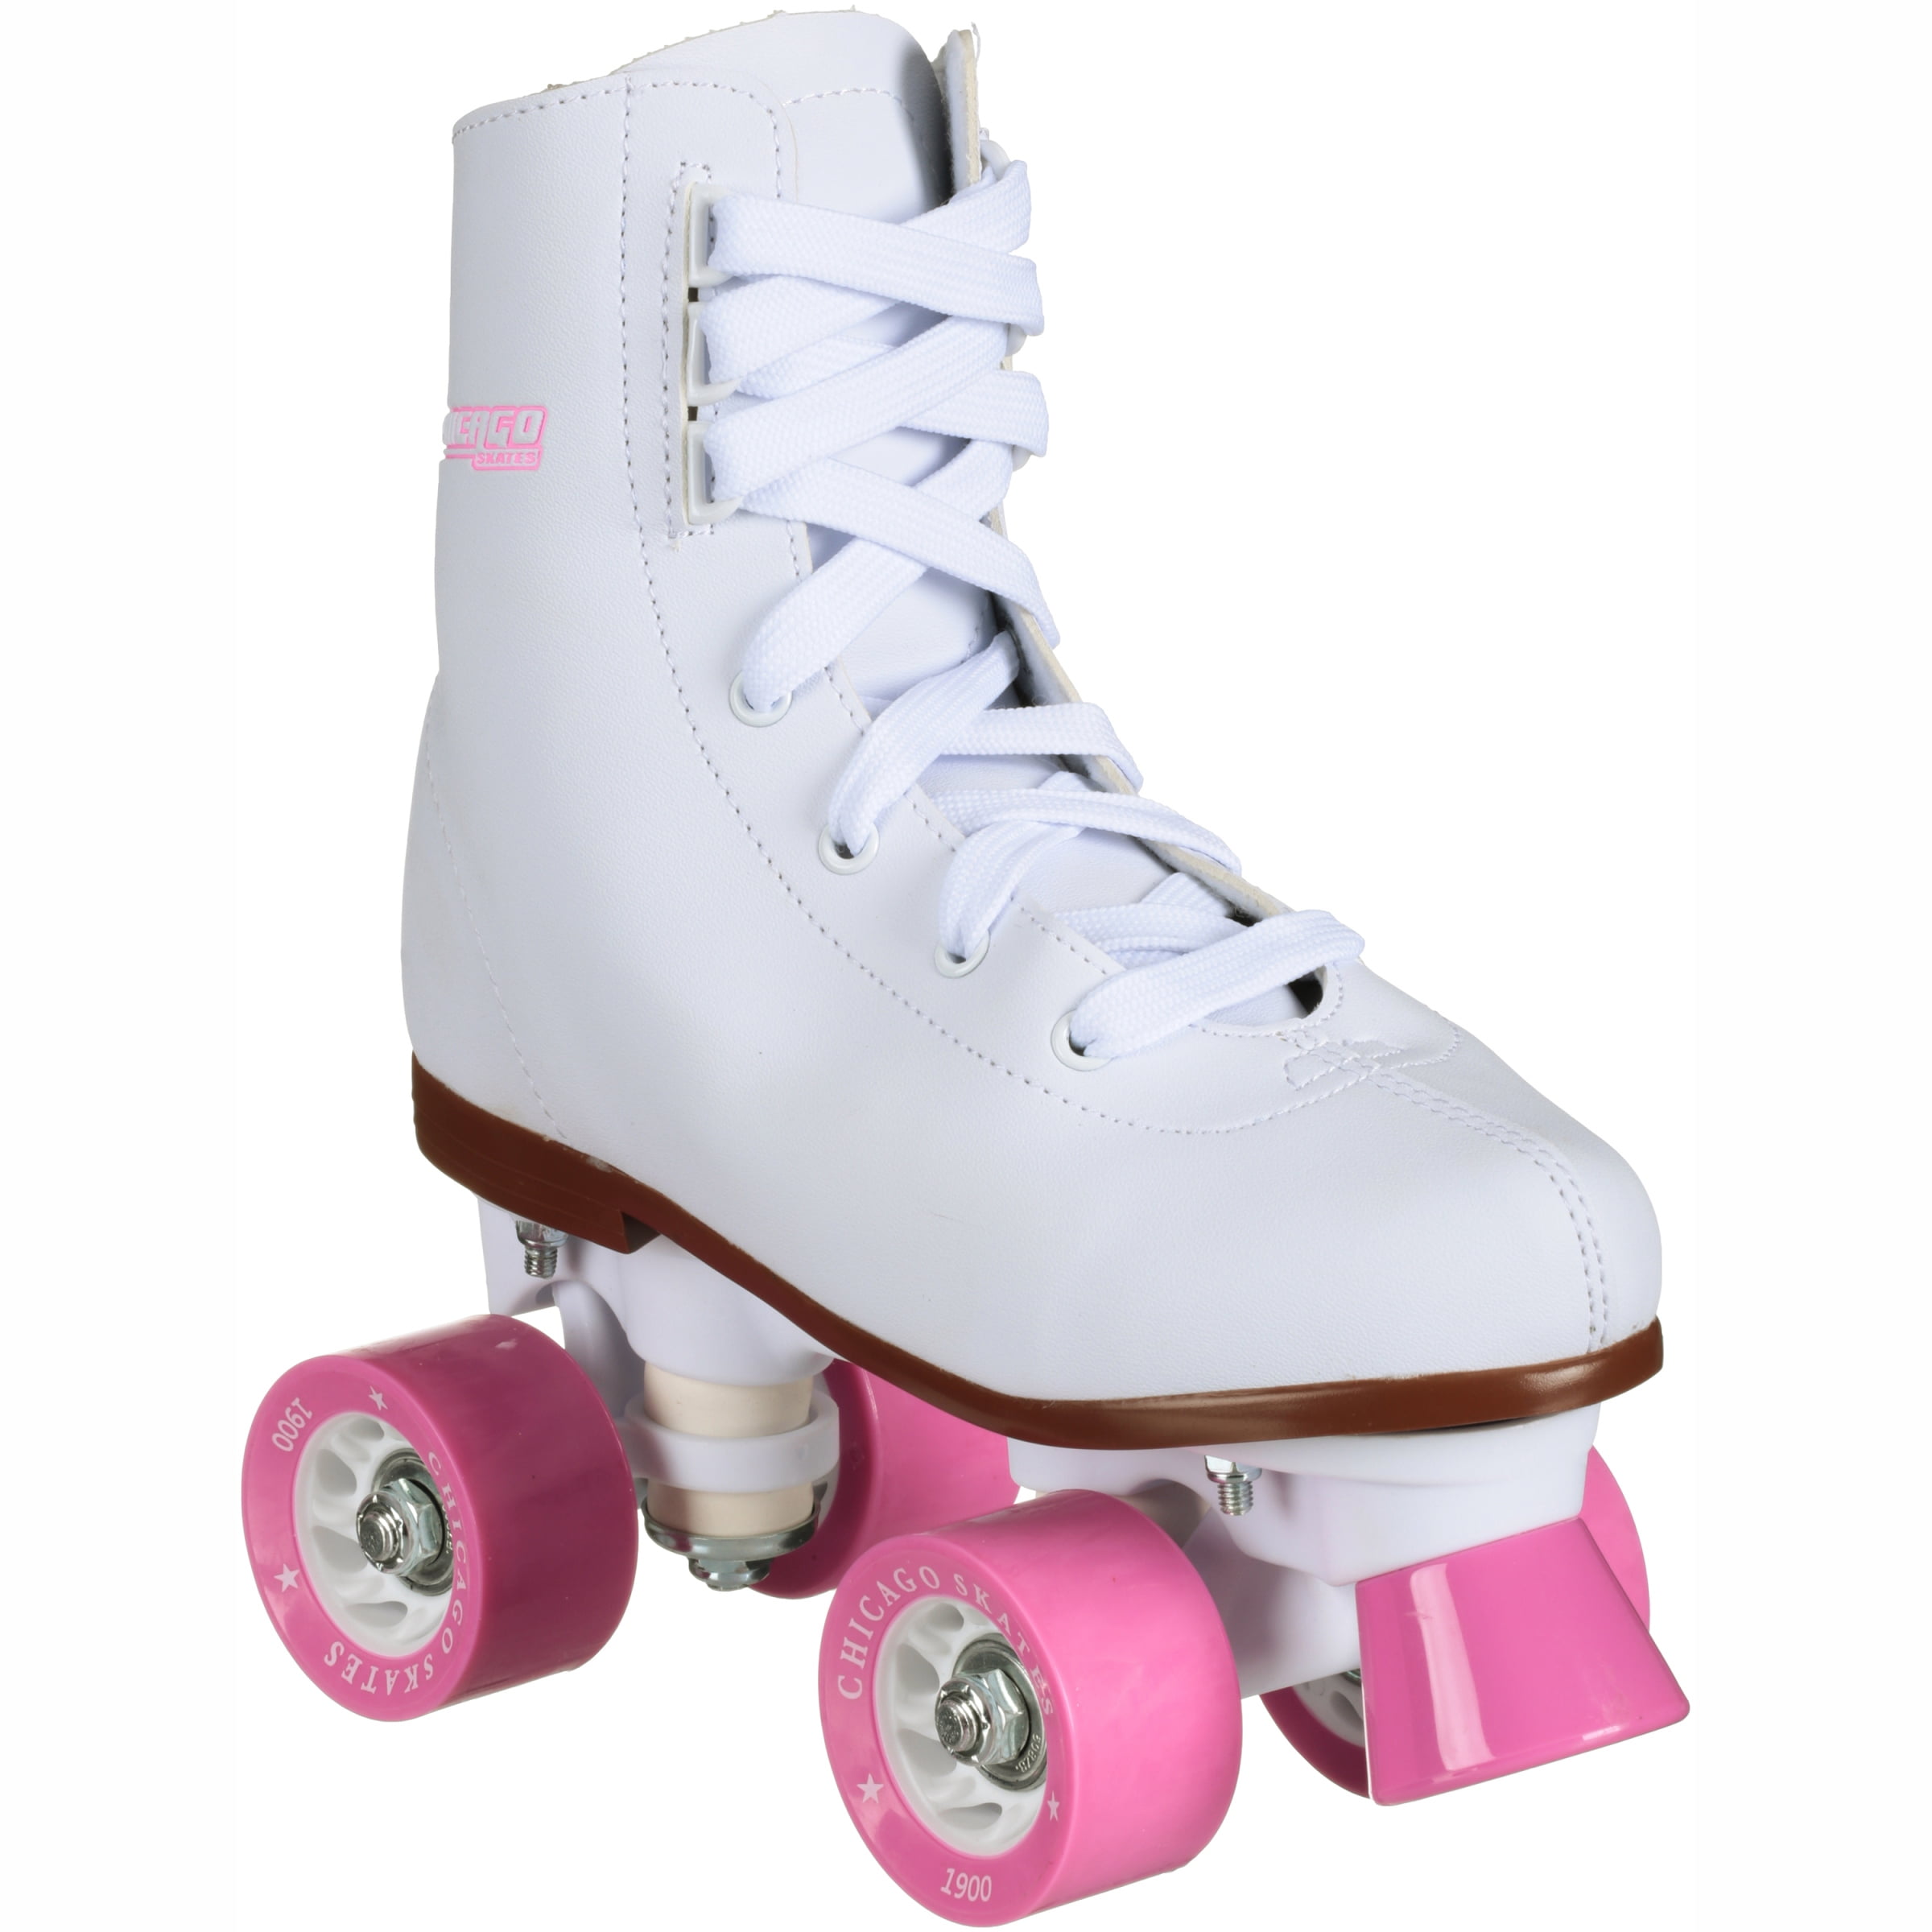 Chicago Girls Rink Skates